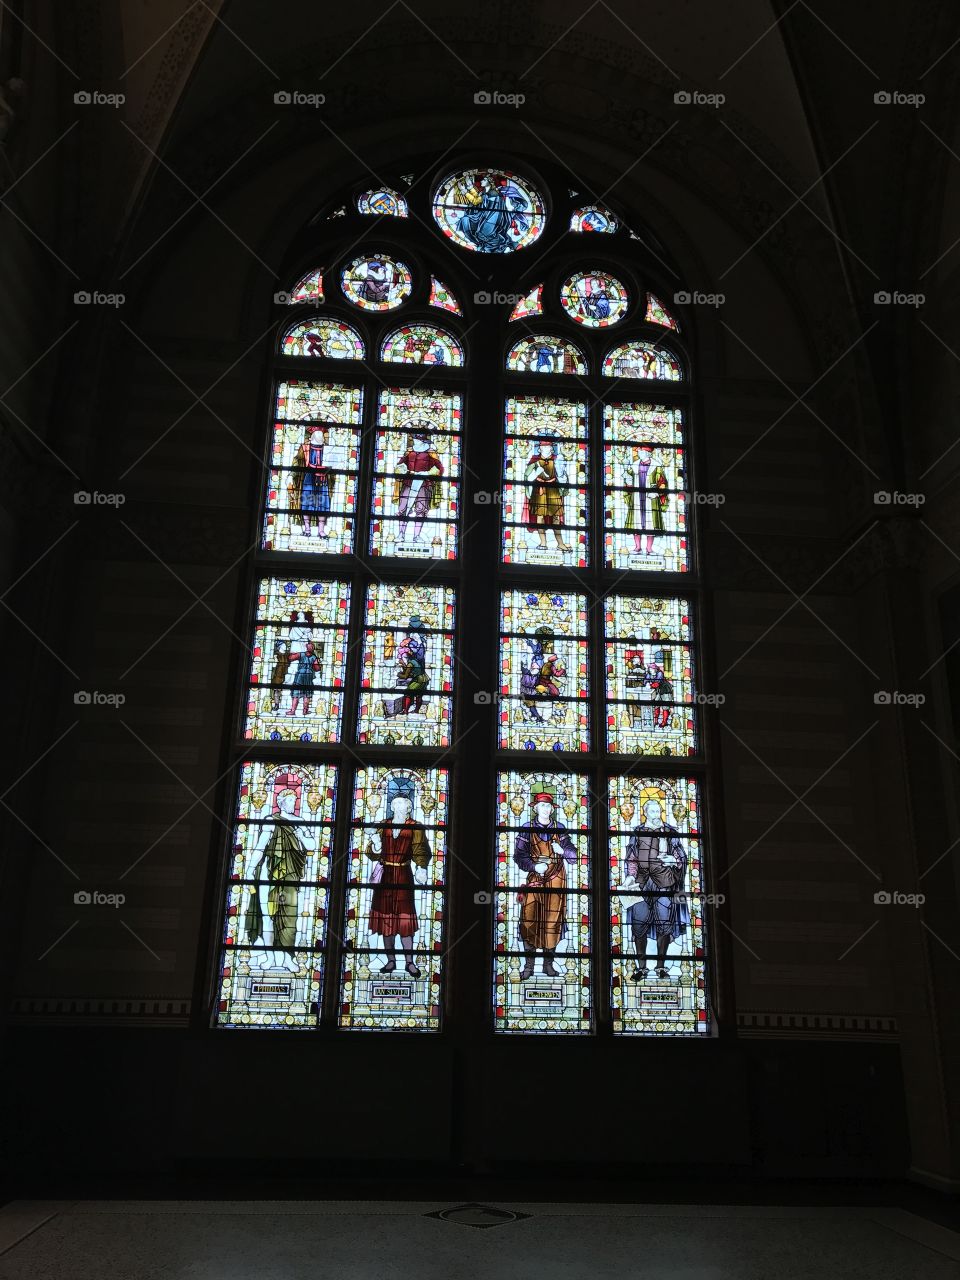 Inside the window panel of the Rijkmuseum in Amsterdam 